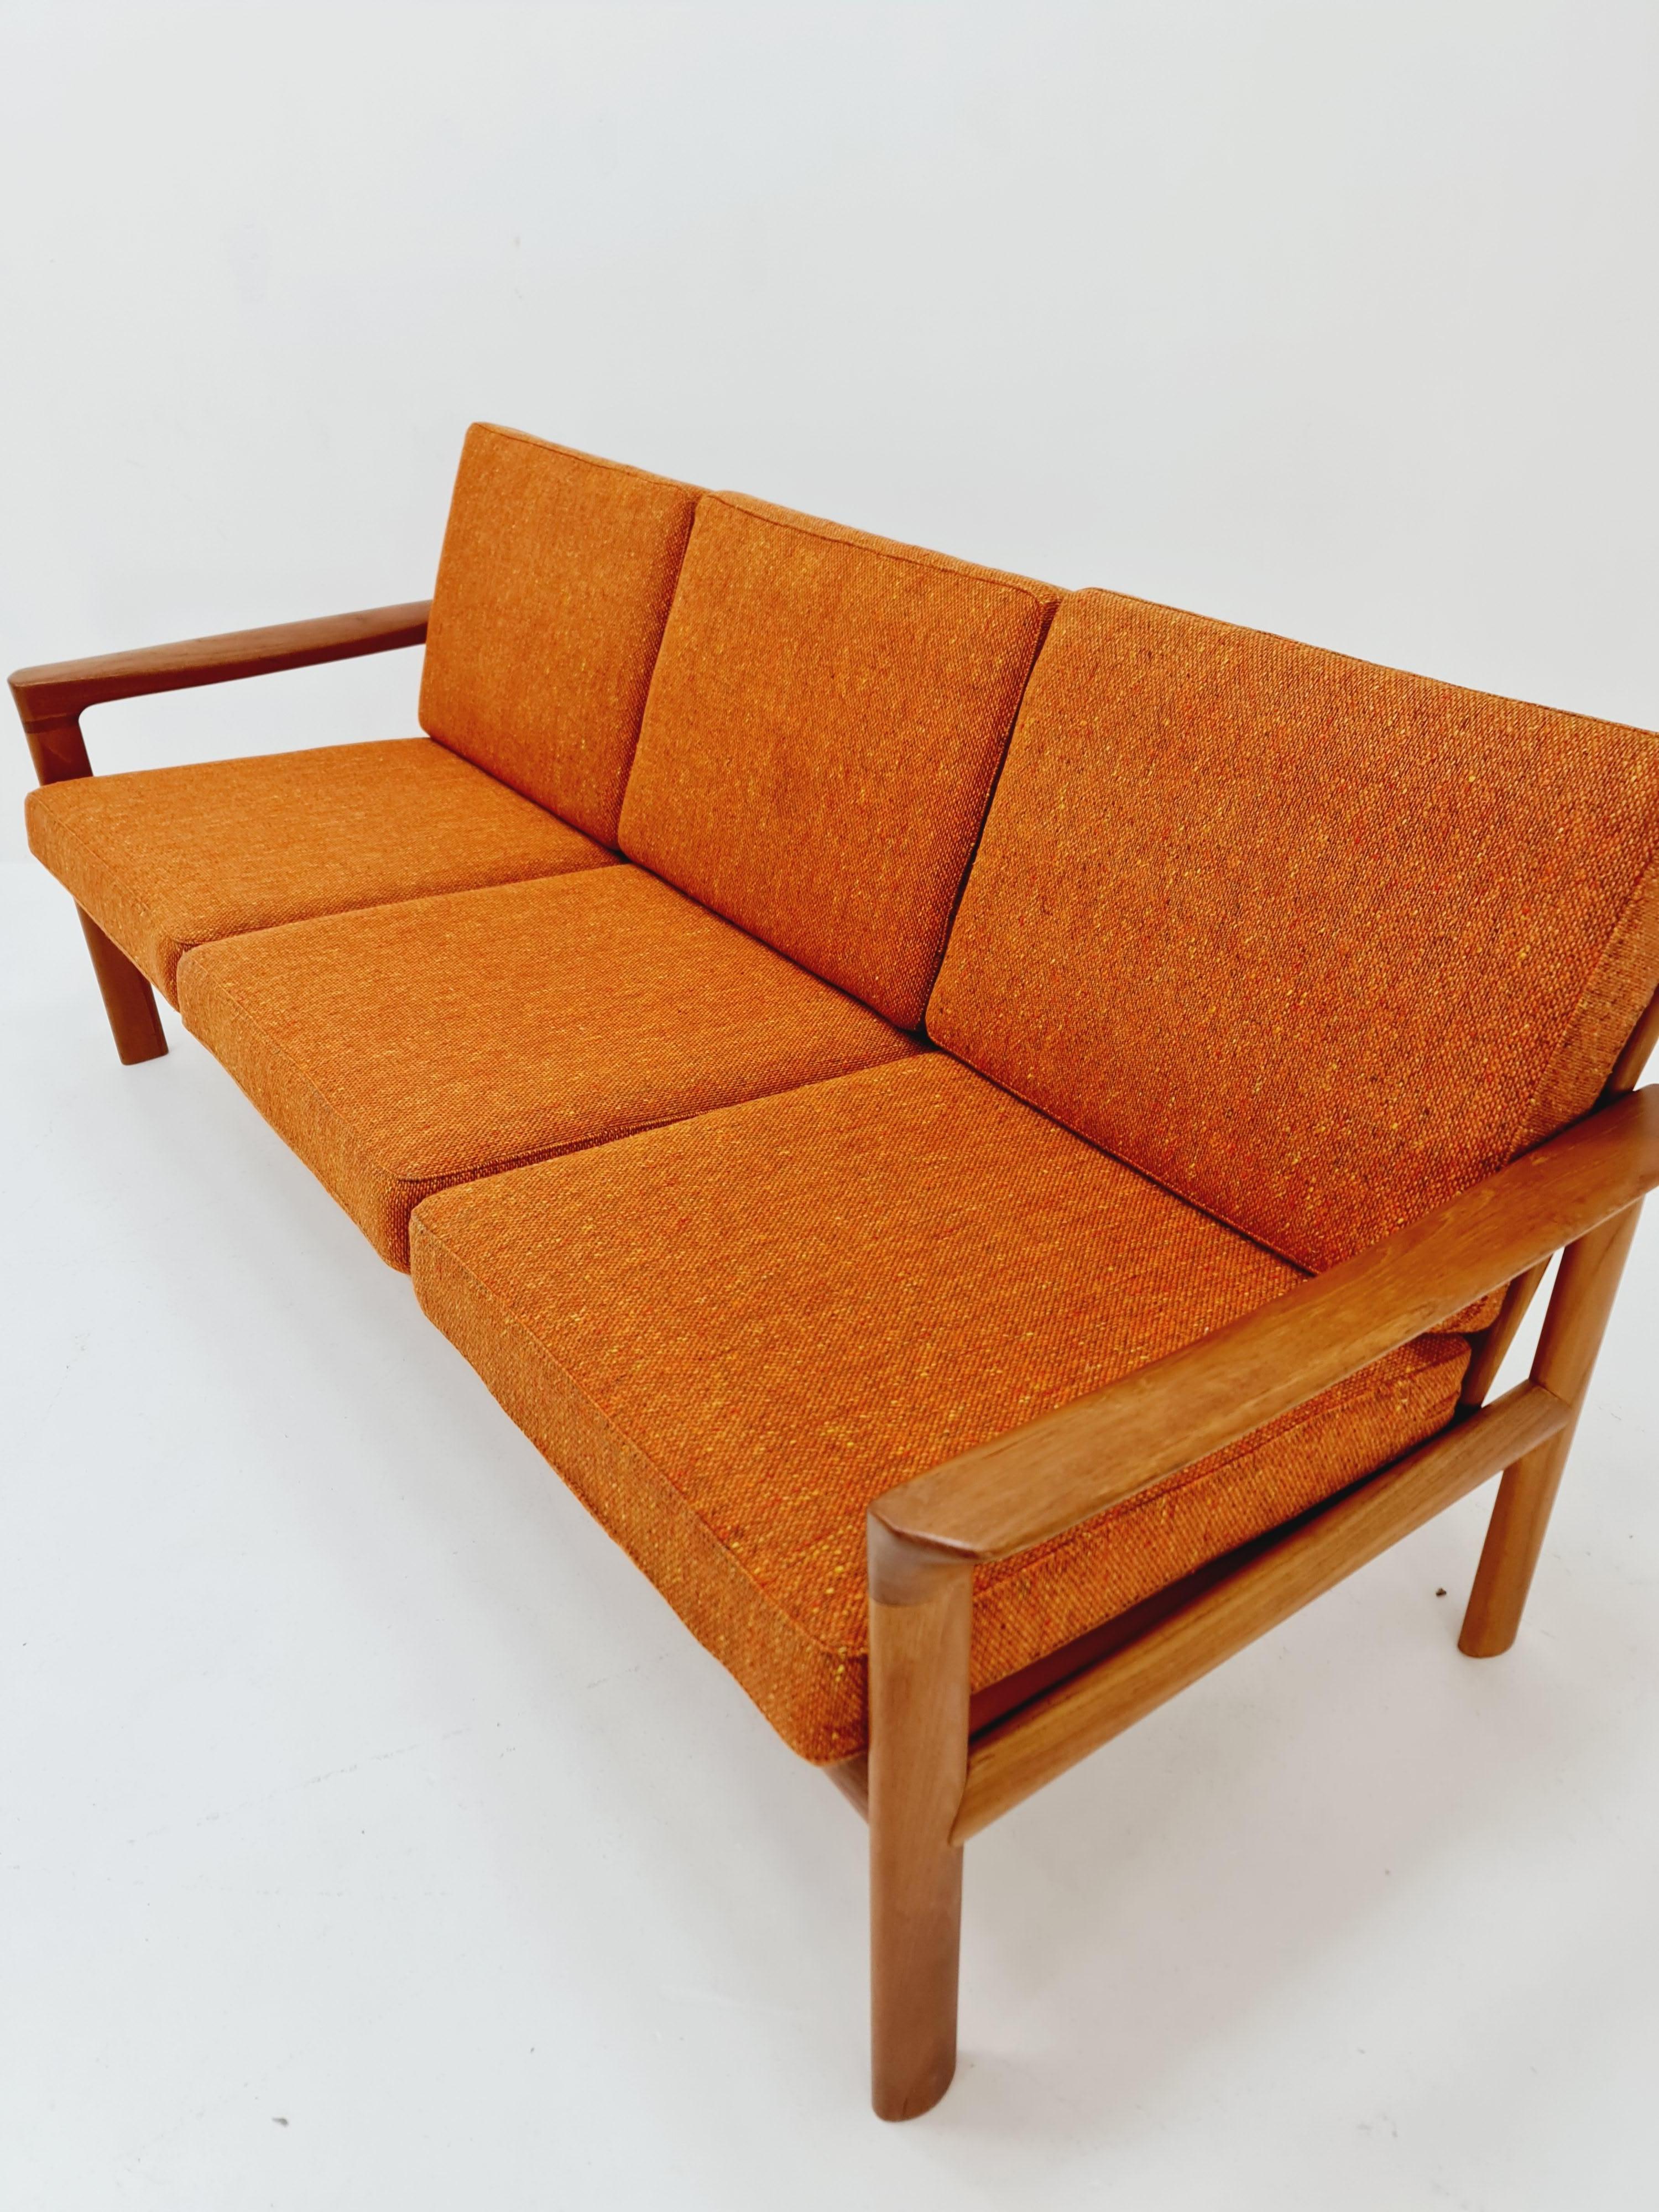 Mid century easy lounge couch by Sven ellekaer for komfort teak  6